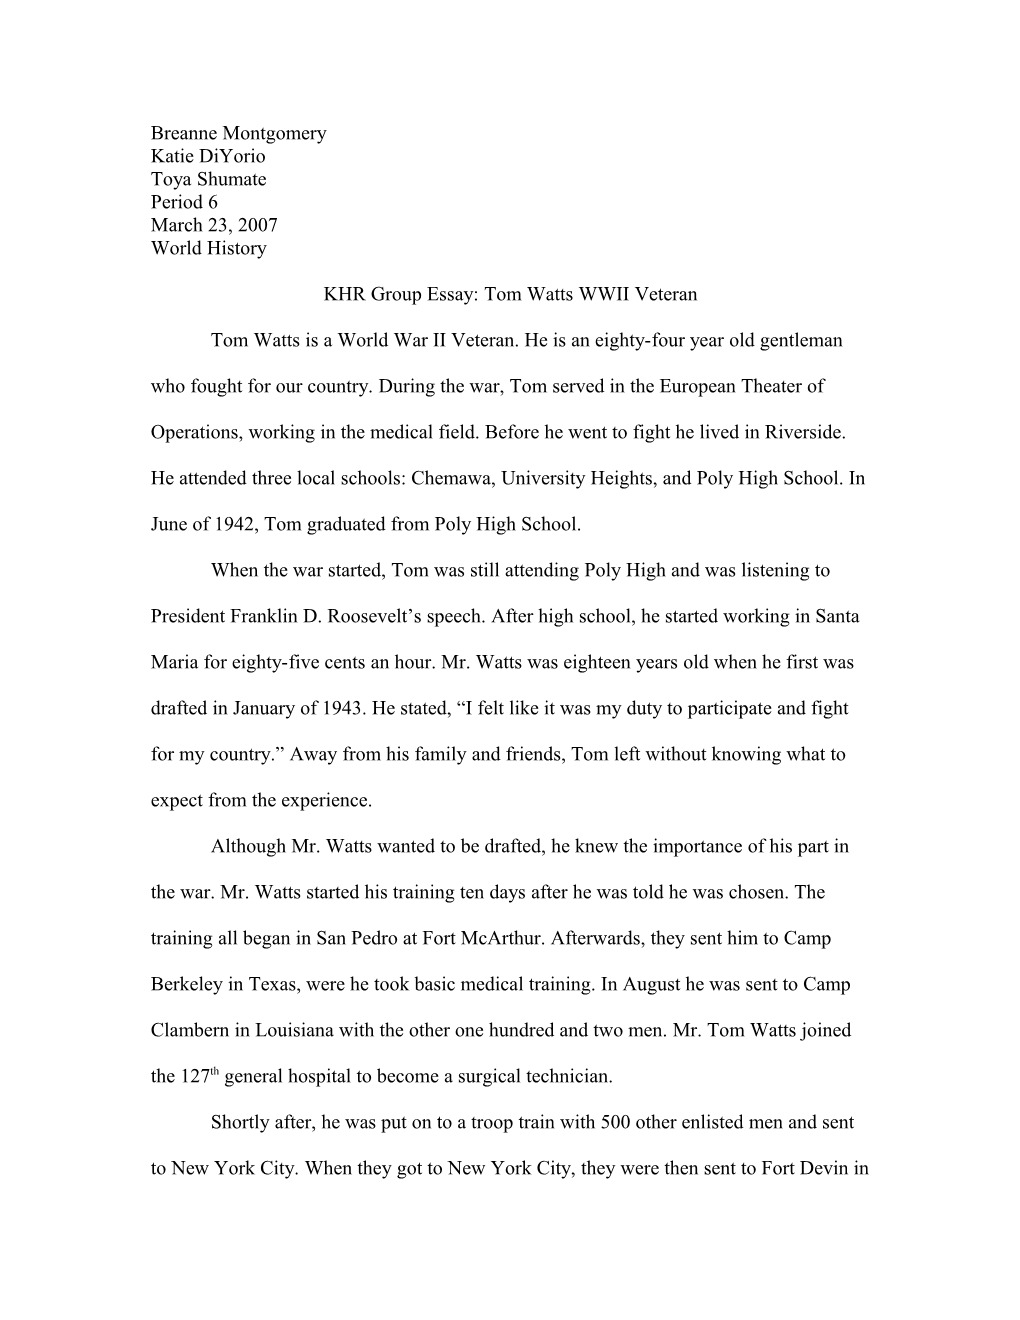 KHR Group Essay: Tom Watts WWII Veteran